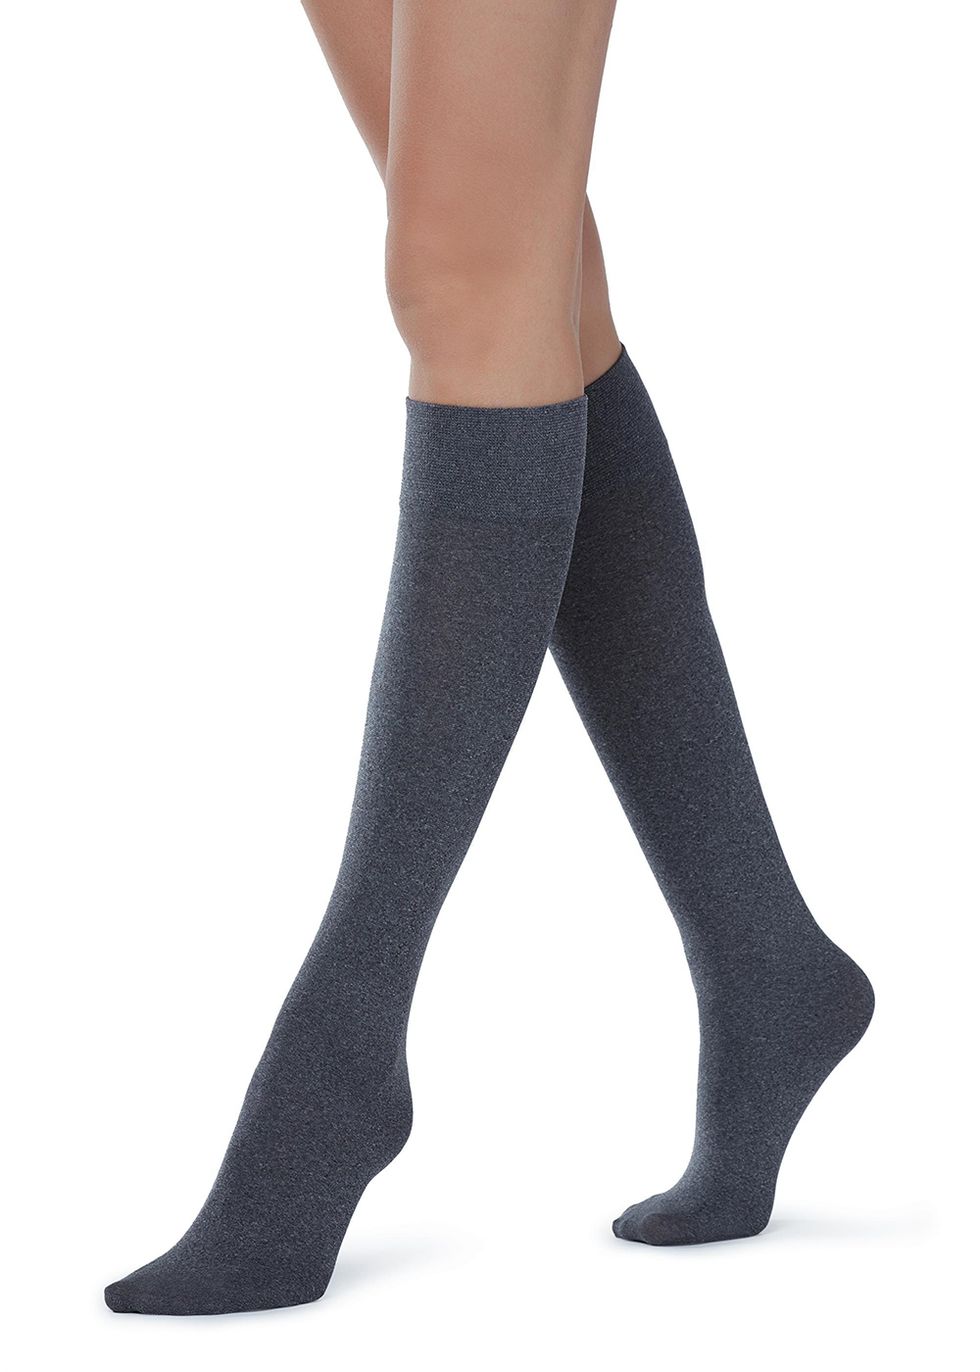 Sock, Human leg, Leg, Footwear, Thigh, Tights, Knee, Joint, Calf, Knee-high boot, 